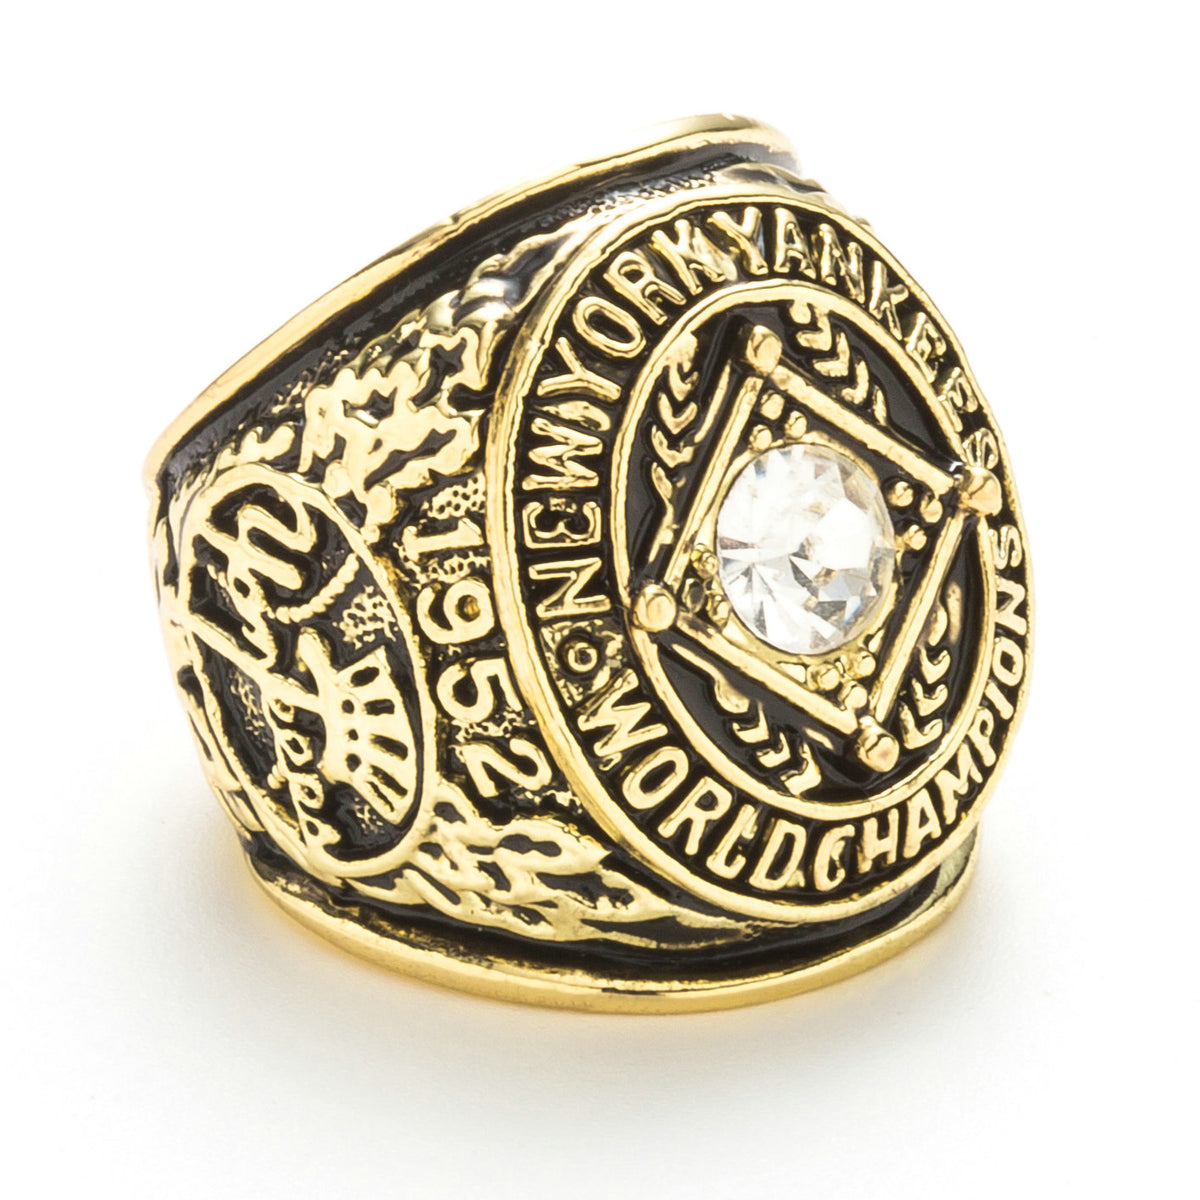 Custom Made Yankees Championship Ring 68178